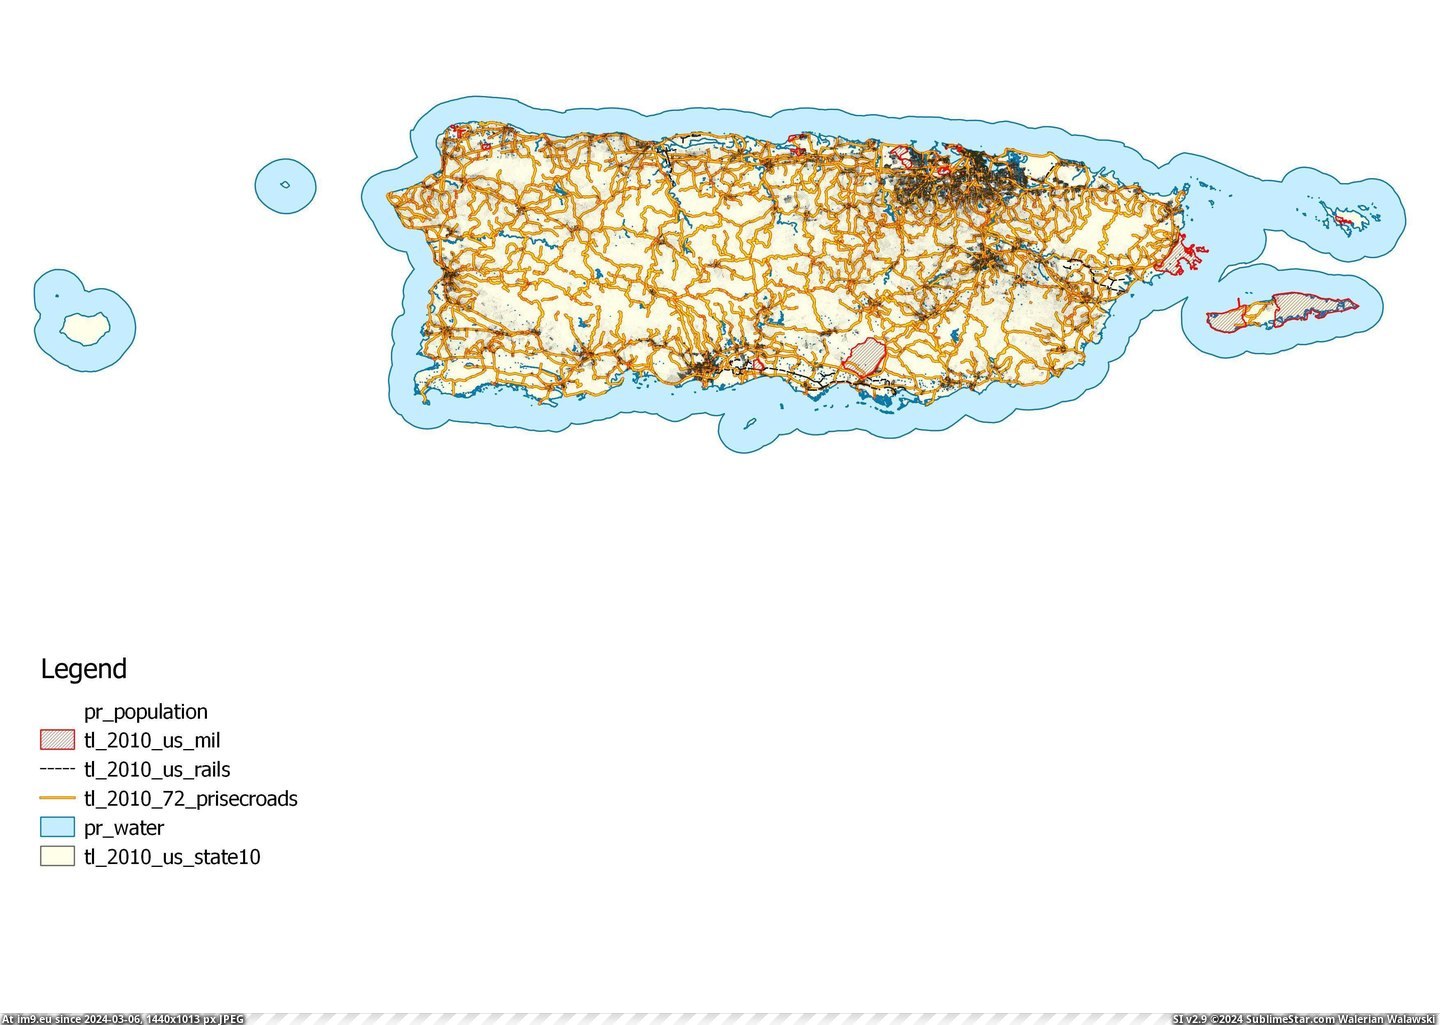 #Map #Population #Rico #Dot #Puerto [Mapporn] Population Dot Map Puerto Rico [3507x2480] Pic. (Изображение из альбом My r/MAPS favs))